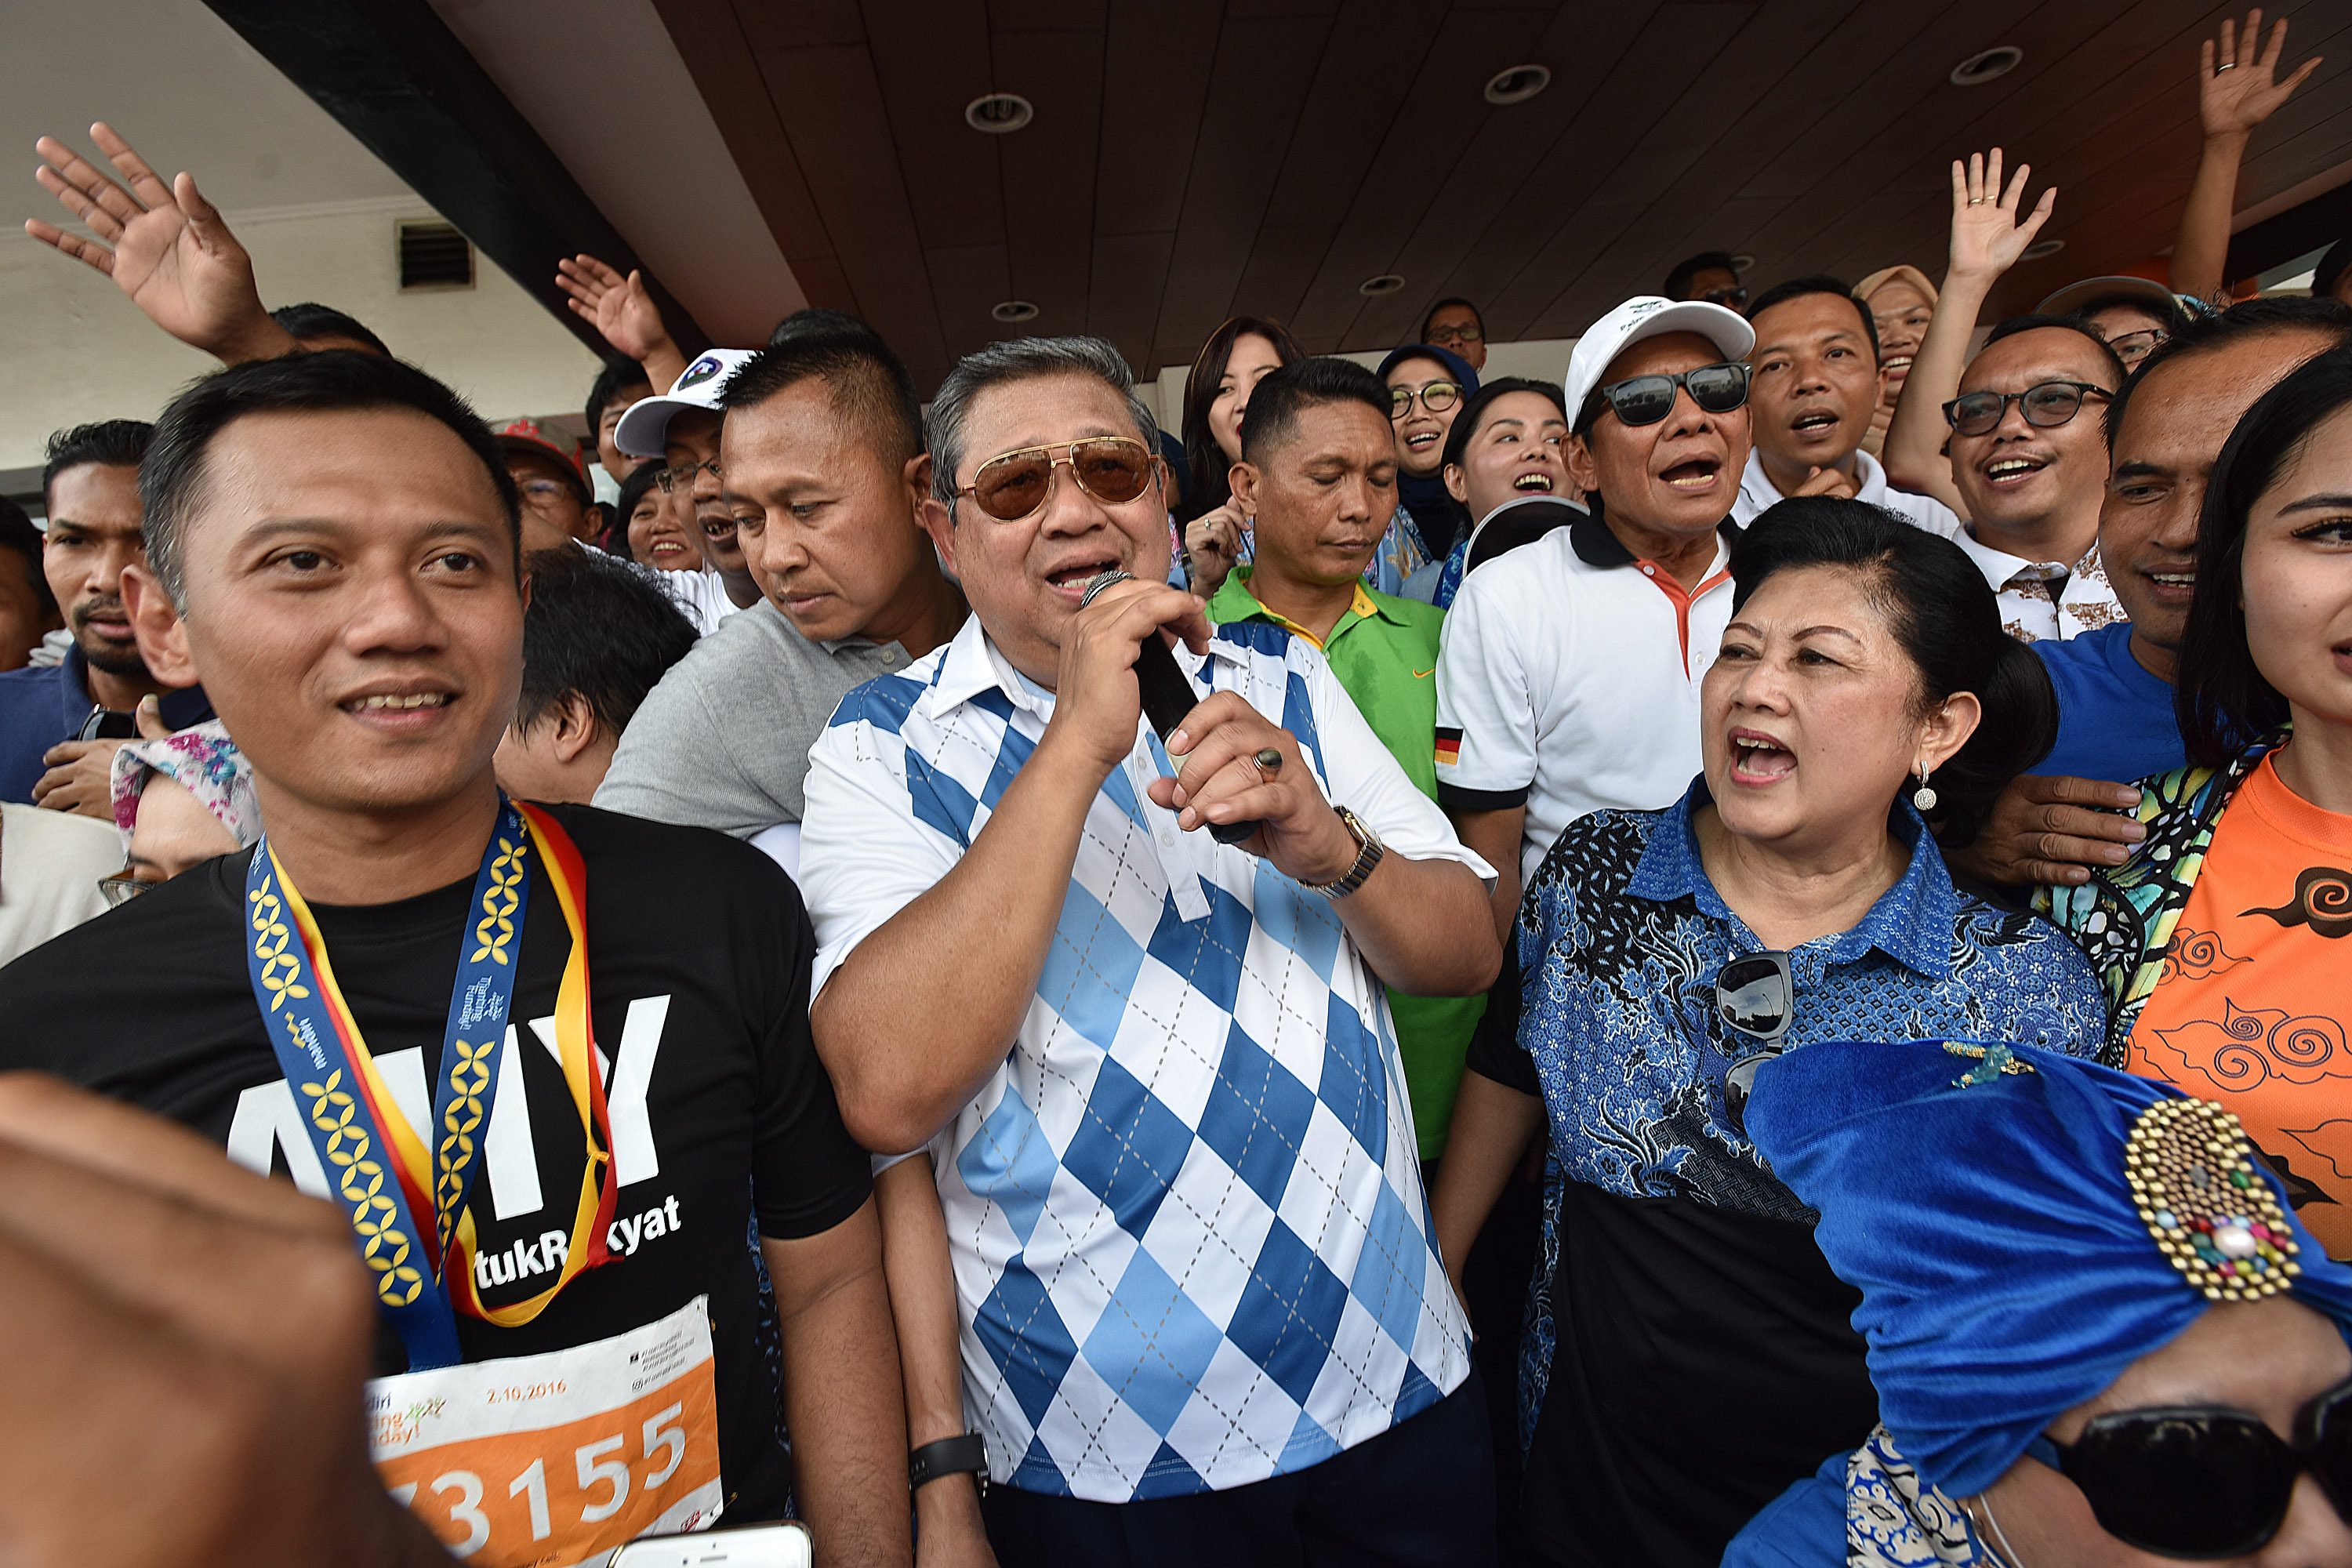 Ketua Umum Partai Demokrat Susilo Bambang Yudhoyono (tengah) bersama Ibu Ani Yudhoyono (kanan) dan calon Gubernur DKI Jakarta Agus Yudhoyono (kiri) menyapa warga di Gedung Sarinah, Jakarta, pada 2 Oktober 2016. Foto oleh Widodo S. Jusuf/Antara 